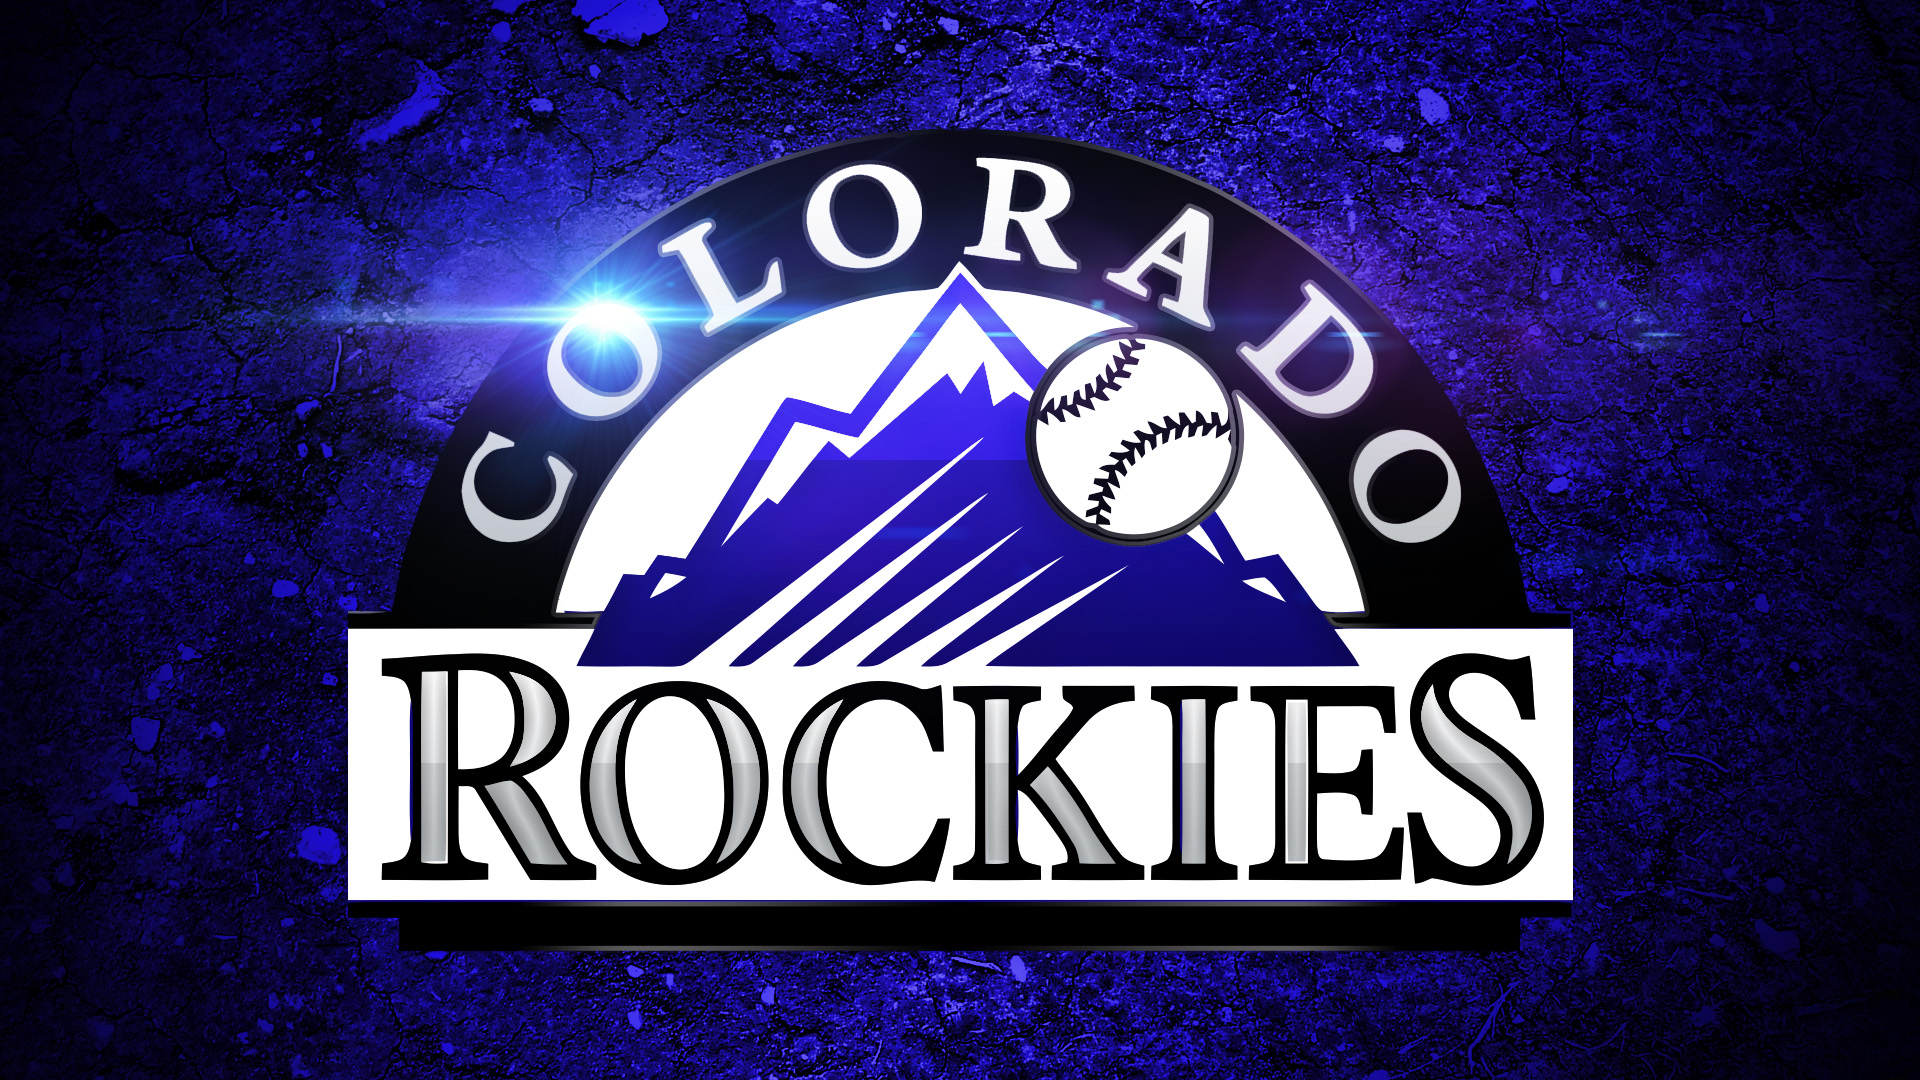 Colorado Rockies Baseball Mlb 41 Wallpapers Hd Desktop And Mobile Backgrounds